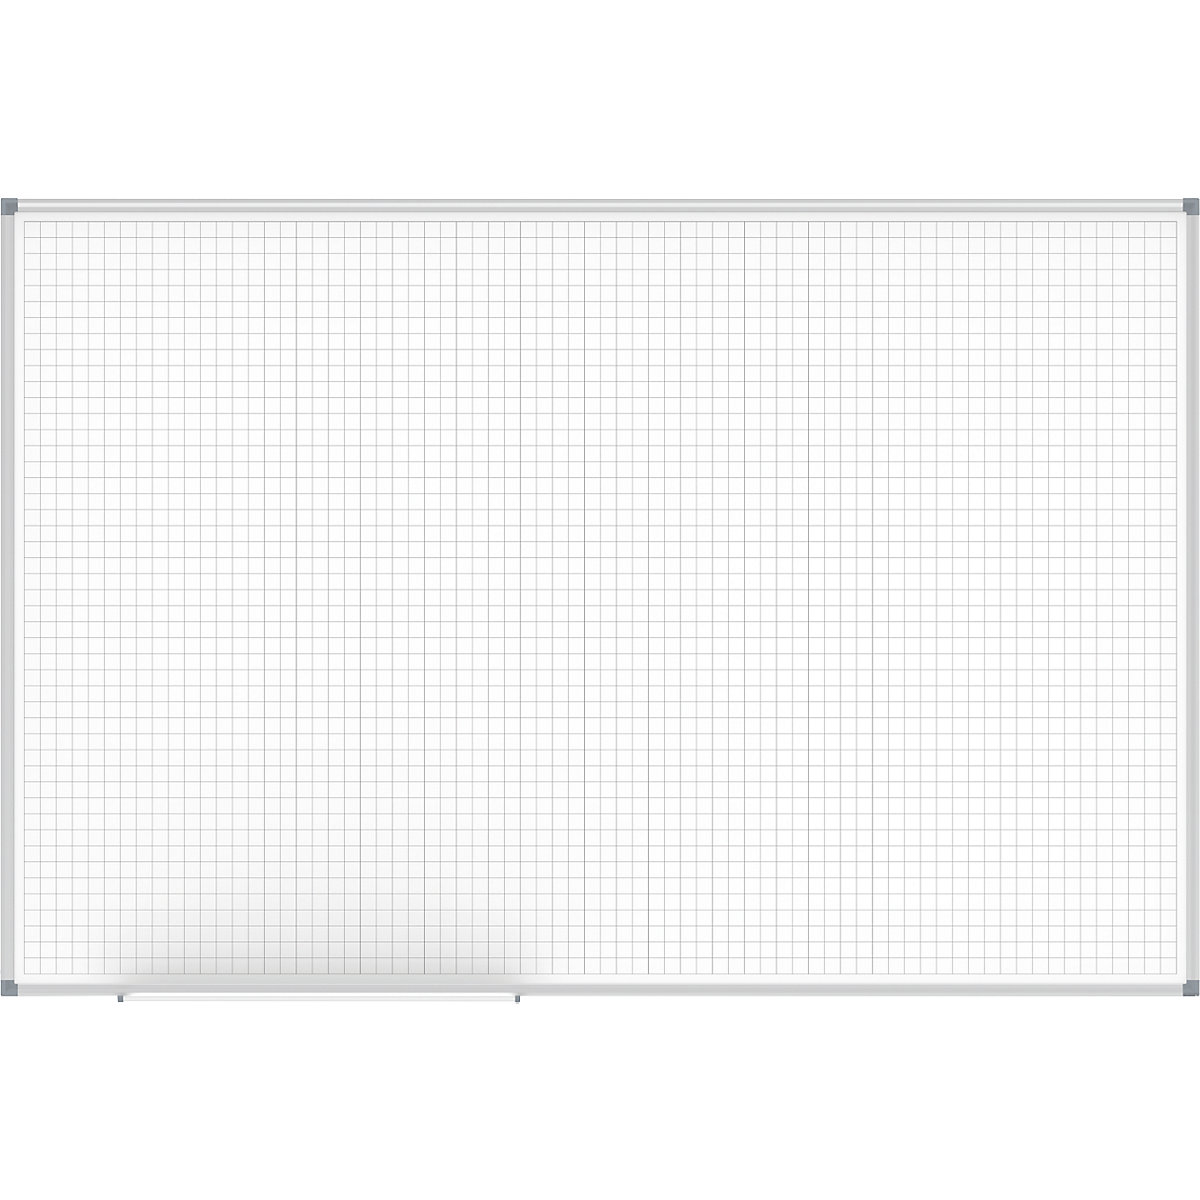 MAULstandard grid board, white – MAUL, grid 20 x 20 mm, WxH 1500 x 1000 mm-3